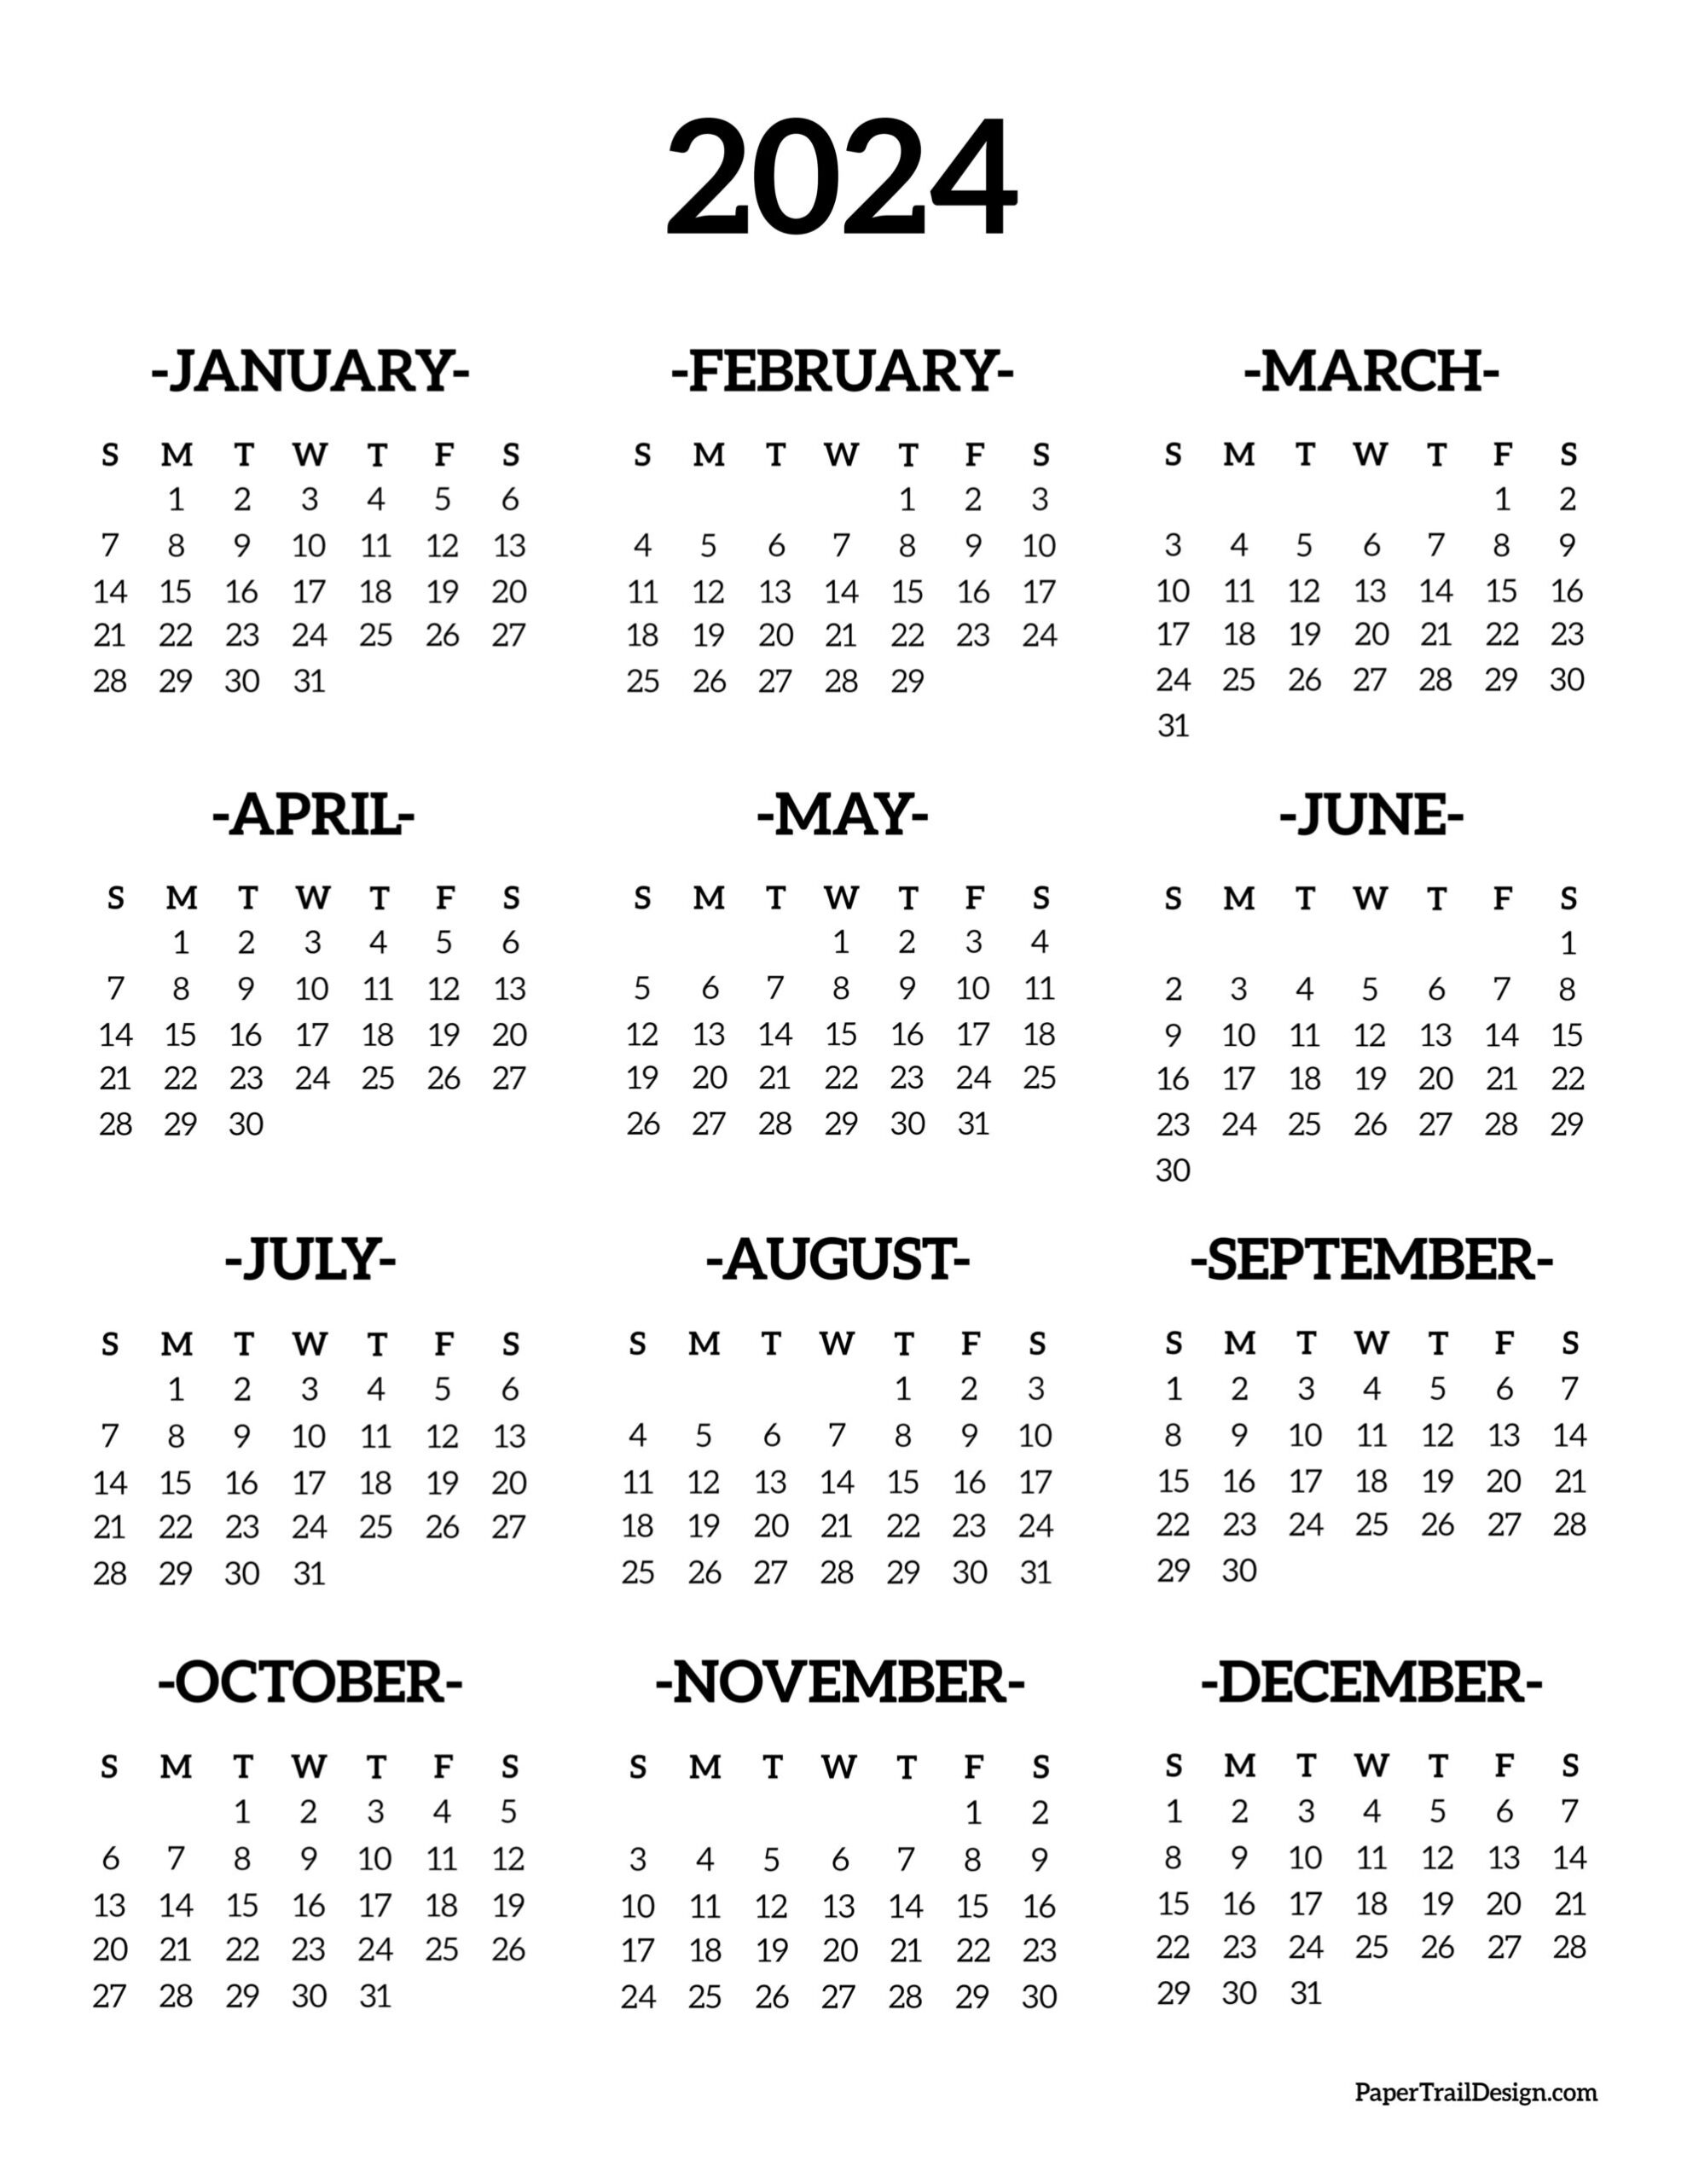 Calendar 2024 Printable One Page - Paper Trail Design | 2024 Calendar Print